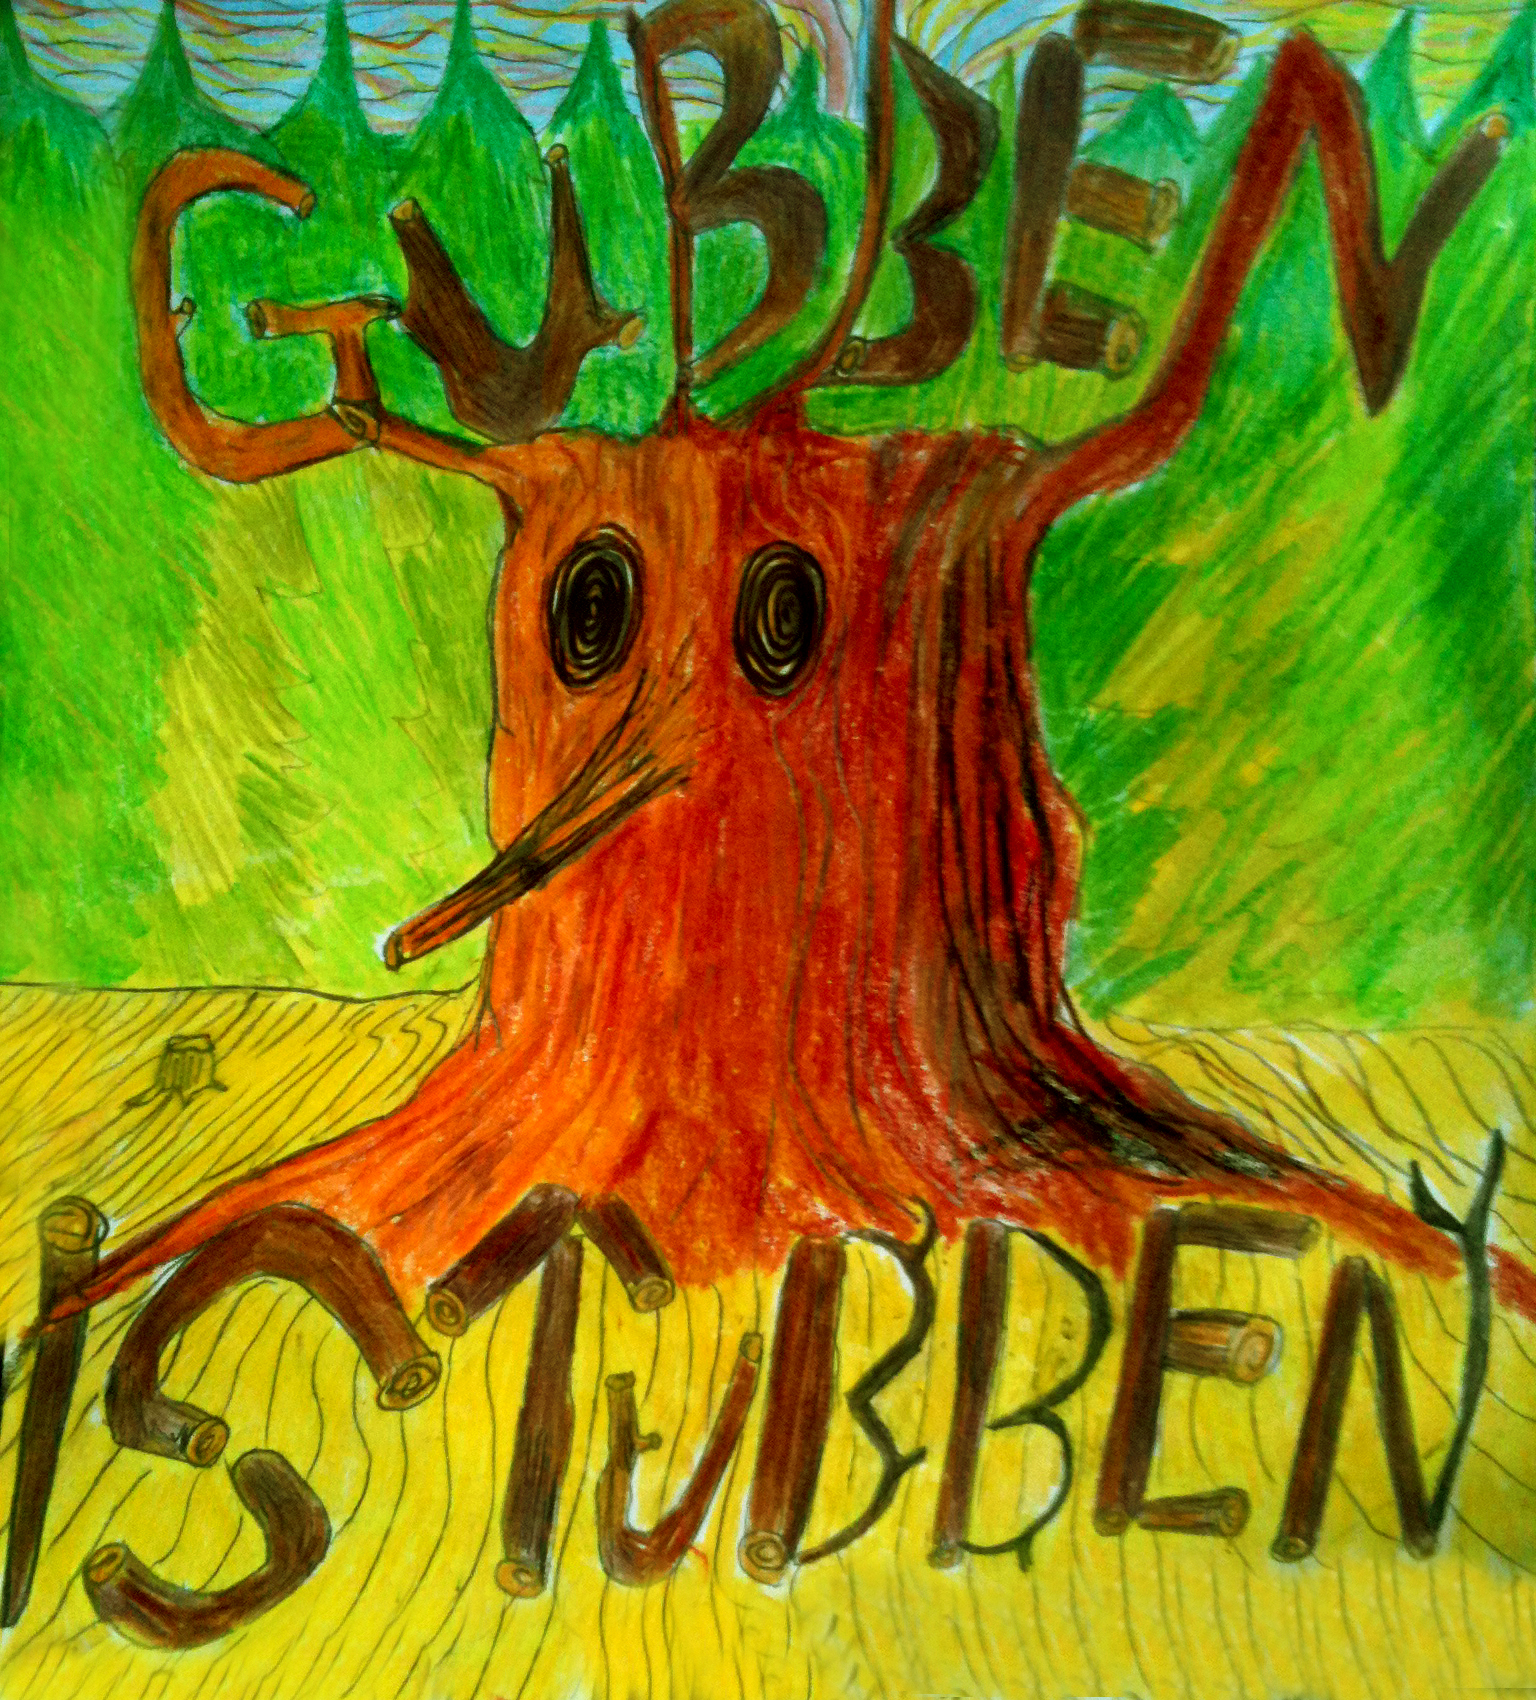 En illustration med en stubbe och texten "Gubben i stubben".